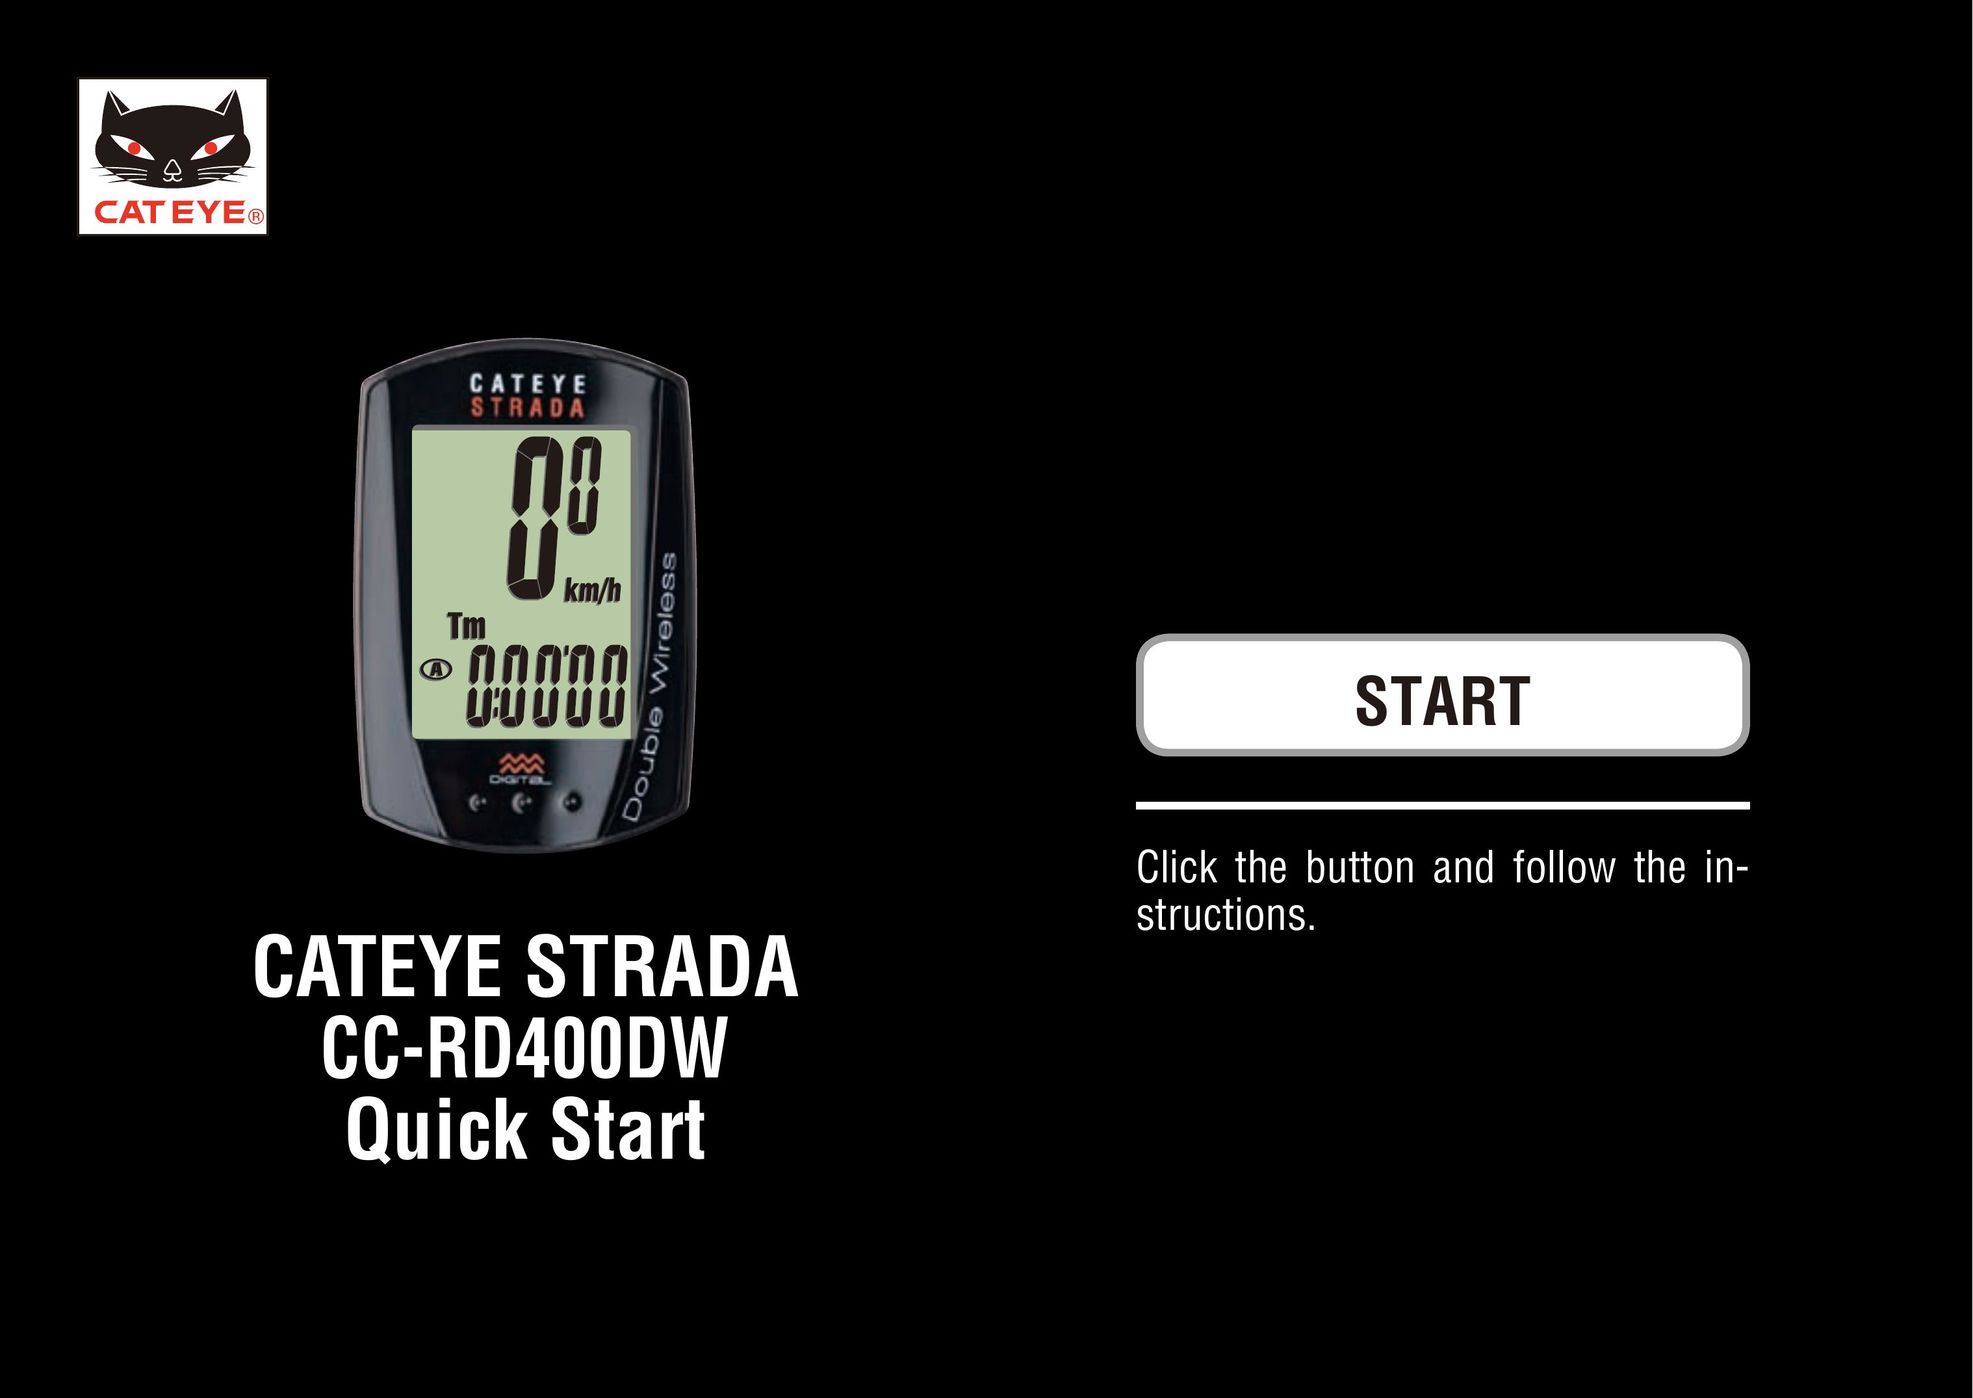 Cateye CC-RD400DW Cyclometer User Manual (Page 1)